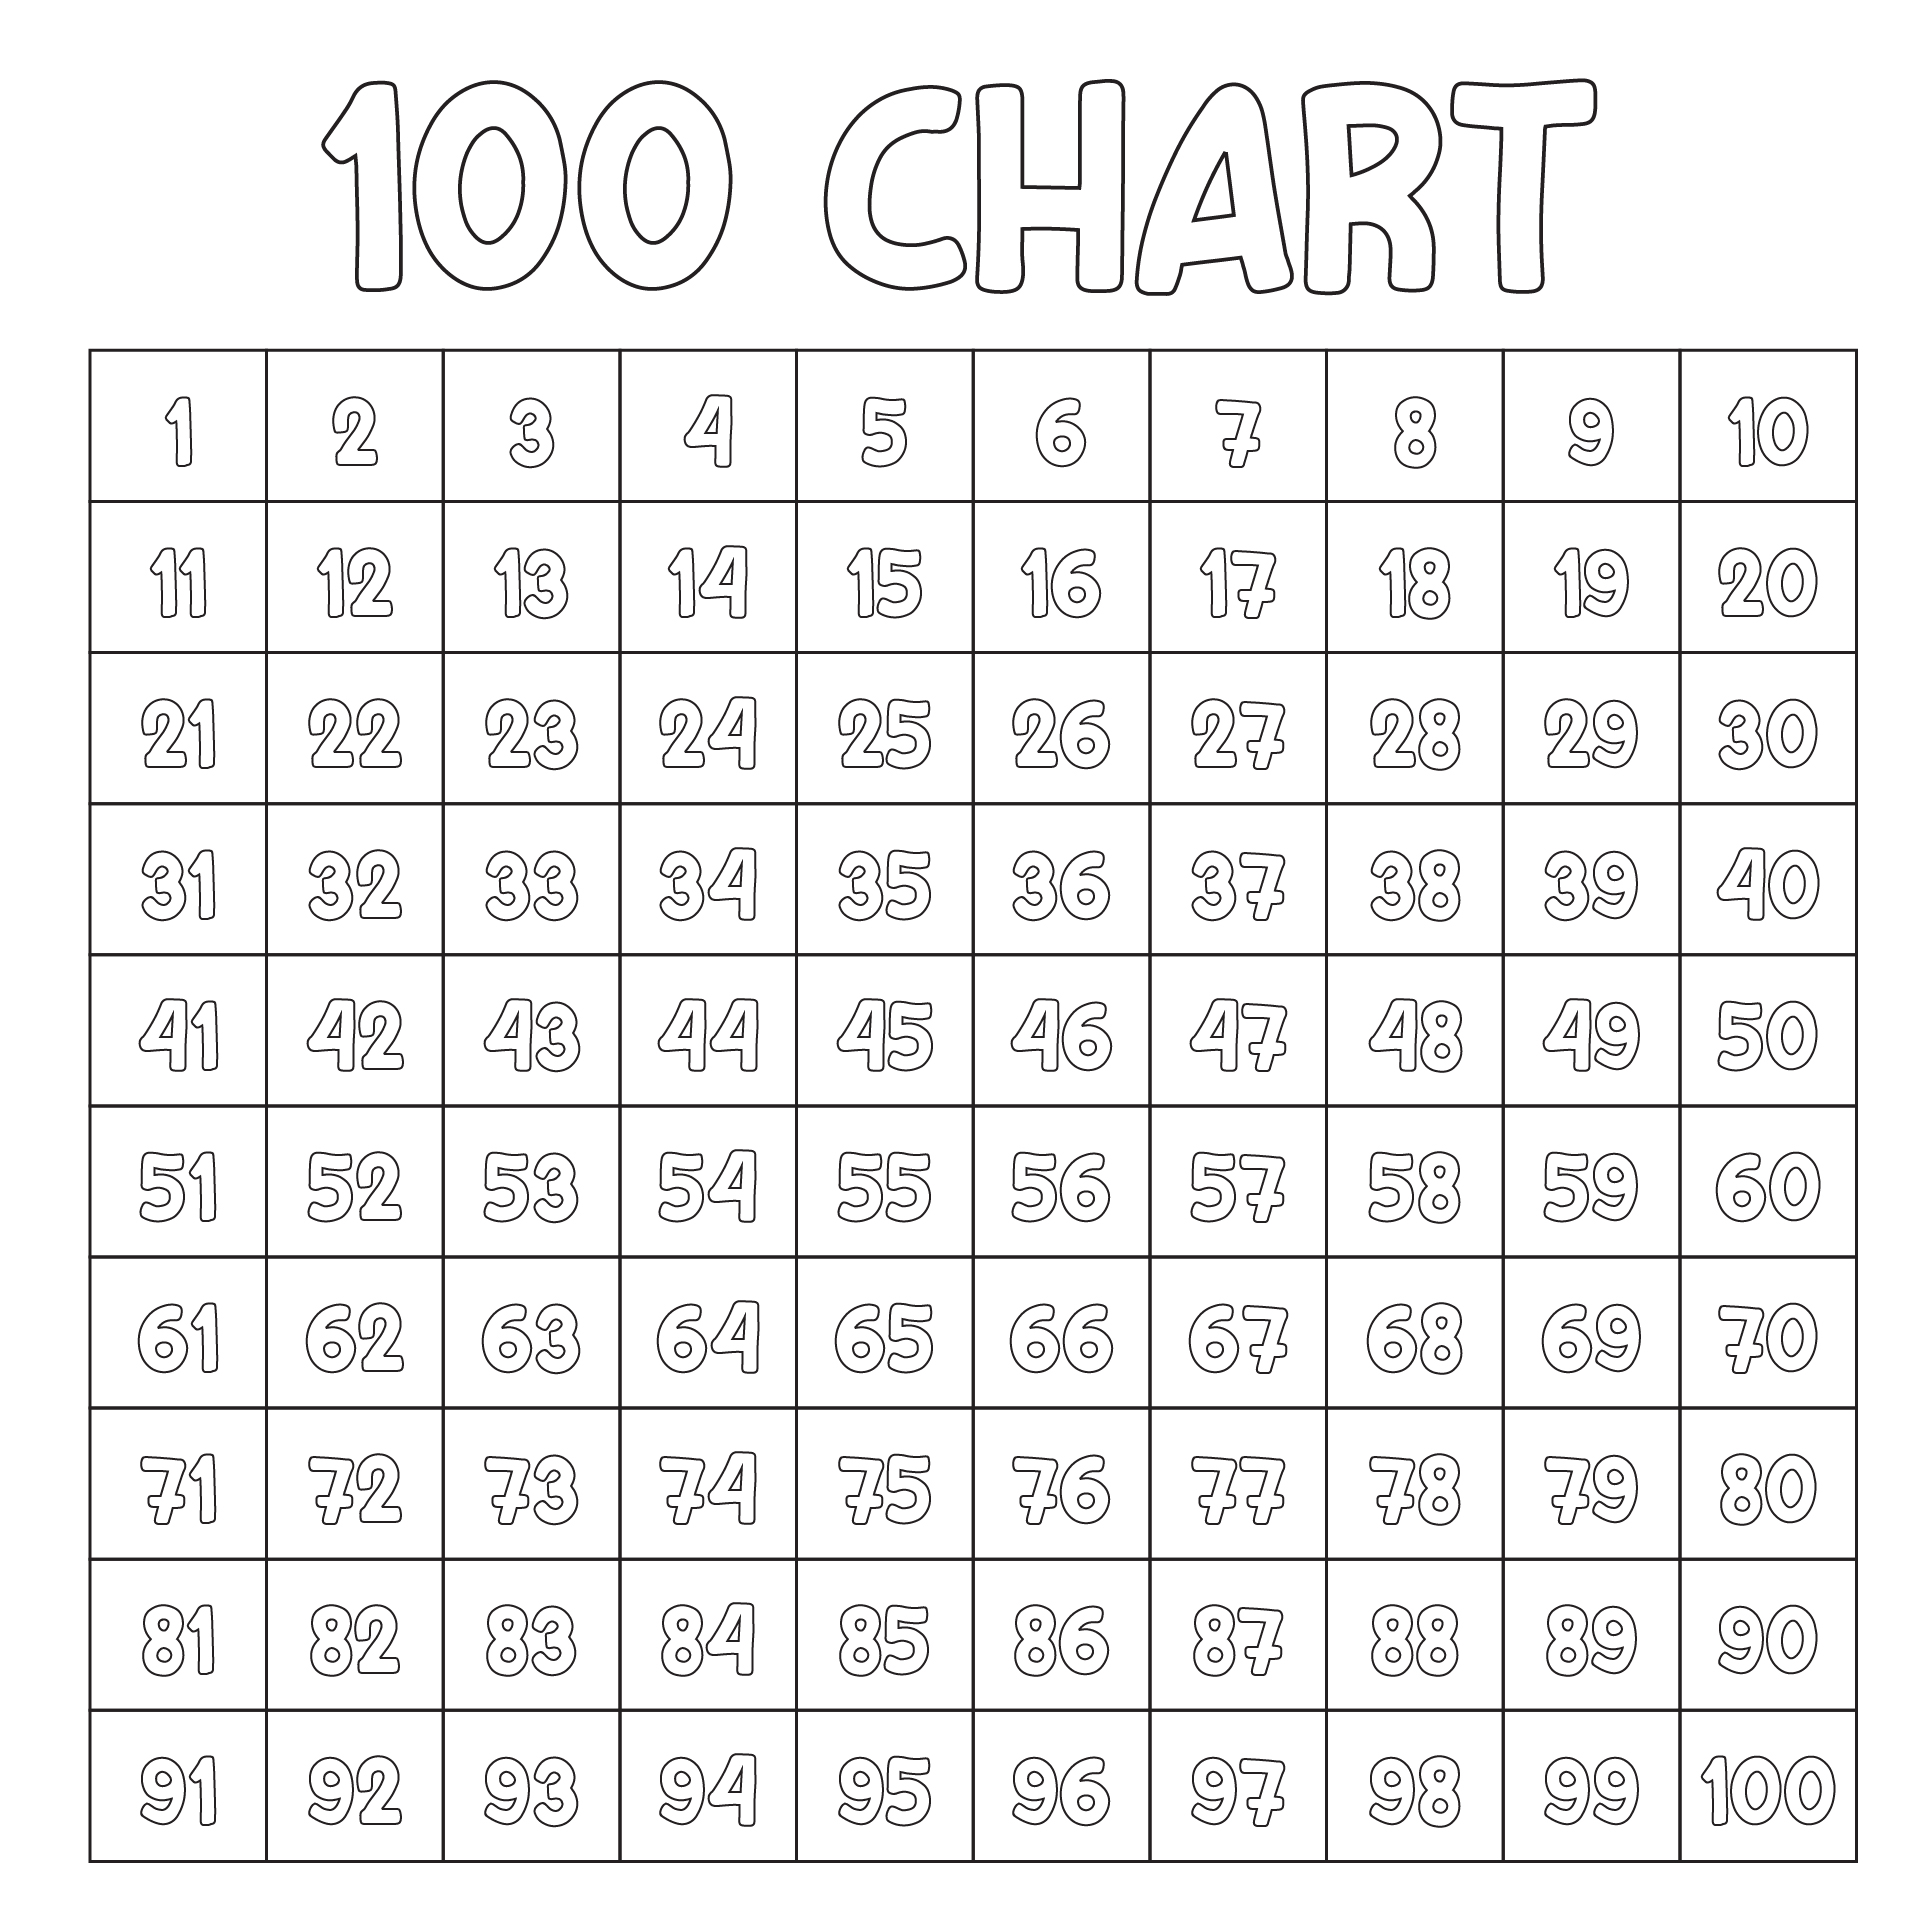 numbers-1-100-chart-grade-k-5-carson-dellosa-publishing-10-best